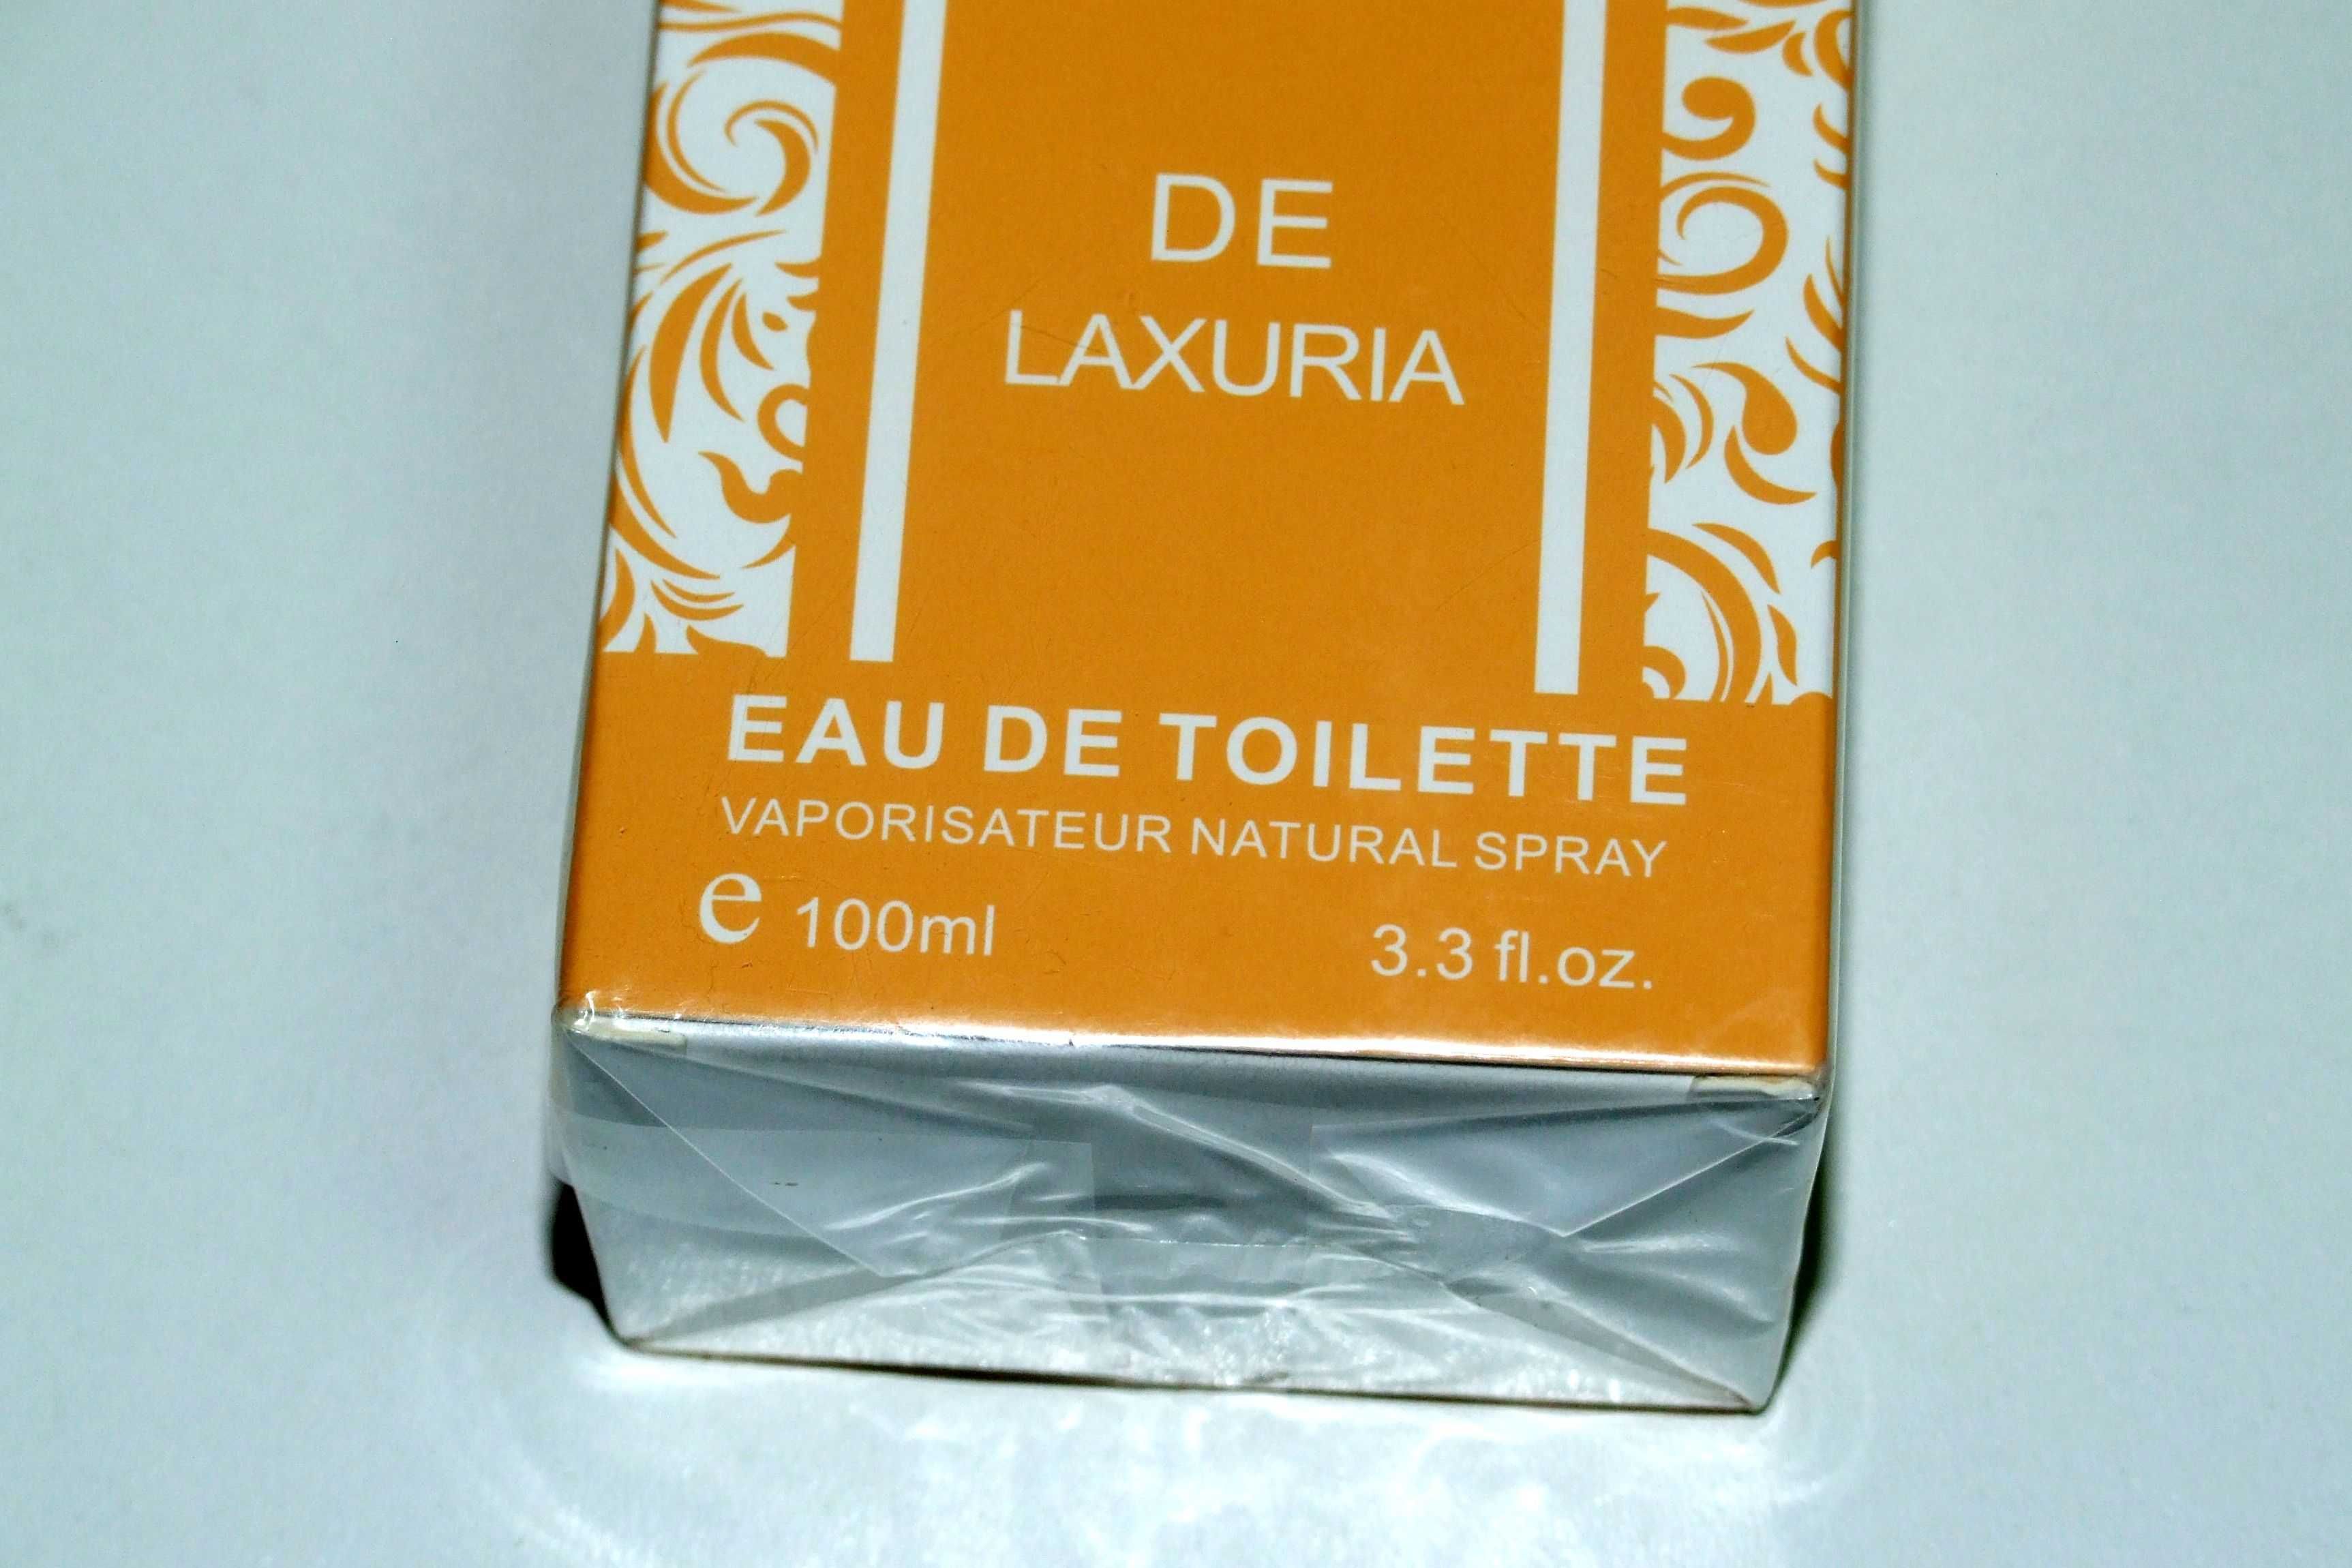 Parfum (Eau de toilette) "Mademoiselle", Made in France, SIGILAT